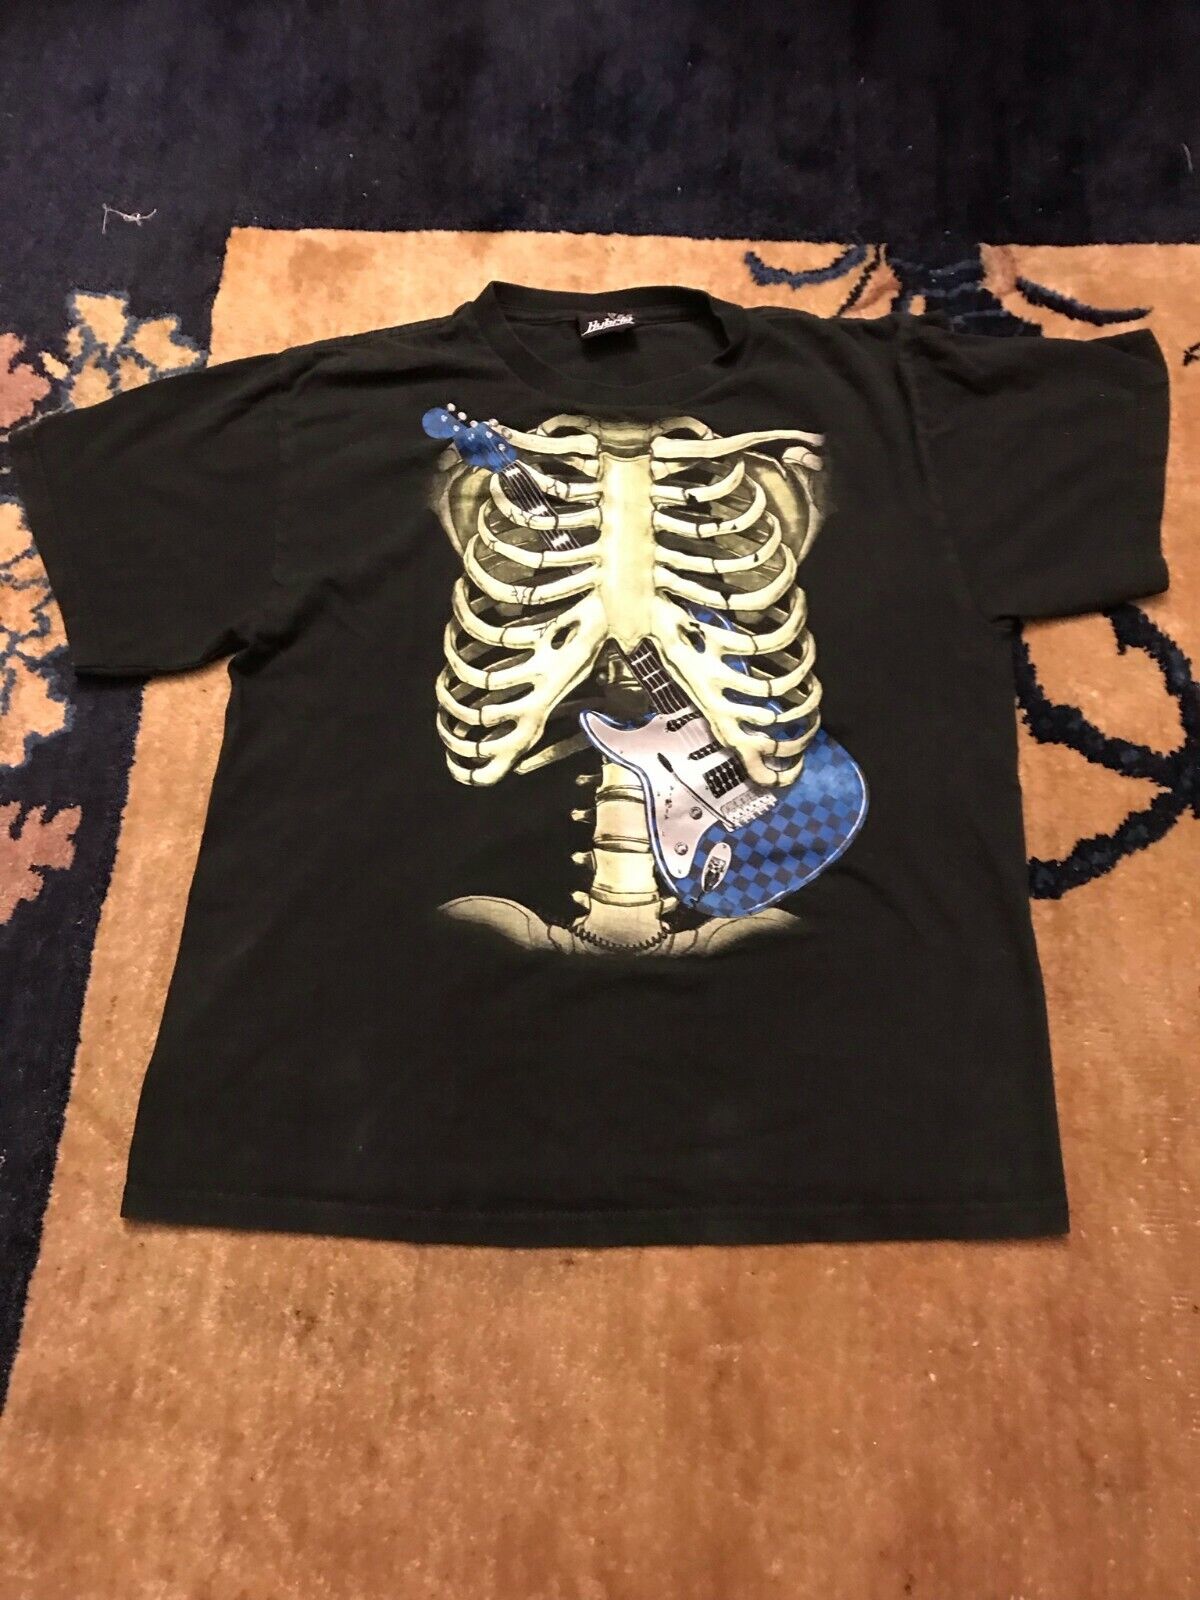 Hybrid Tees Super Cool Skeleton Guitar T Shirt Musician theme Black Tee Size XL